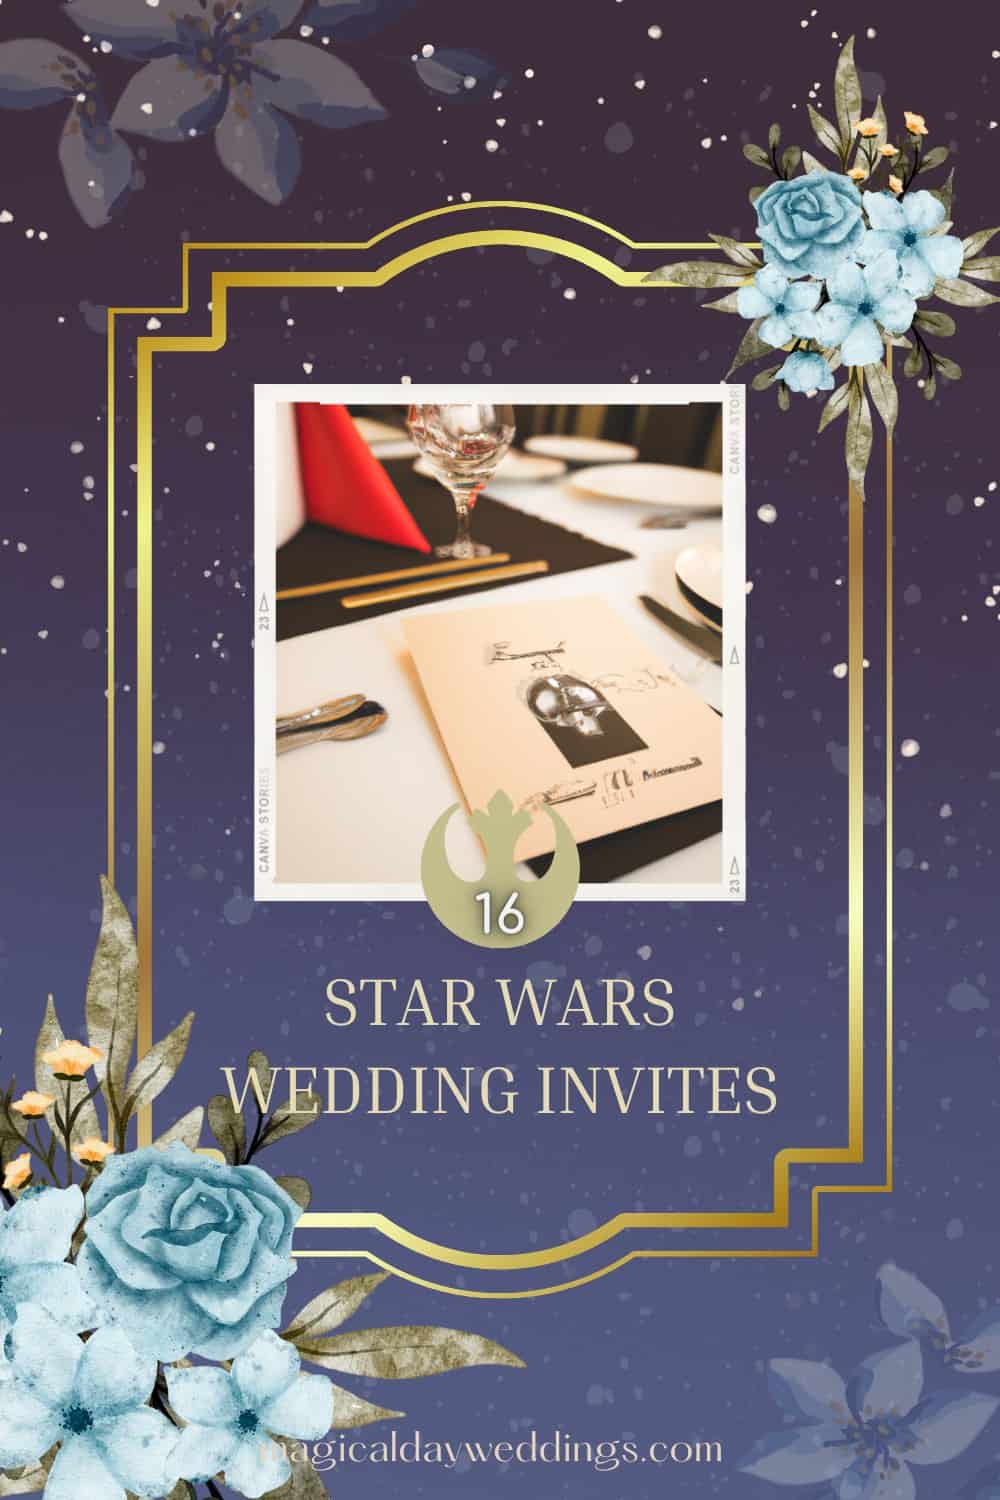 16 star wars wedding invites you'll love - magical day weddings